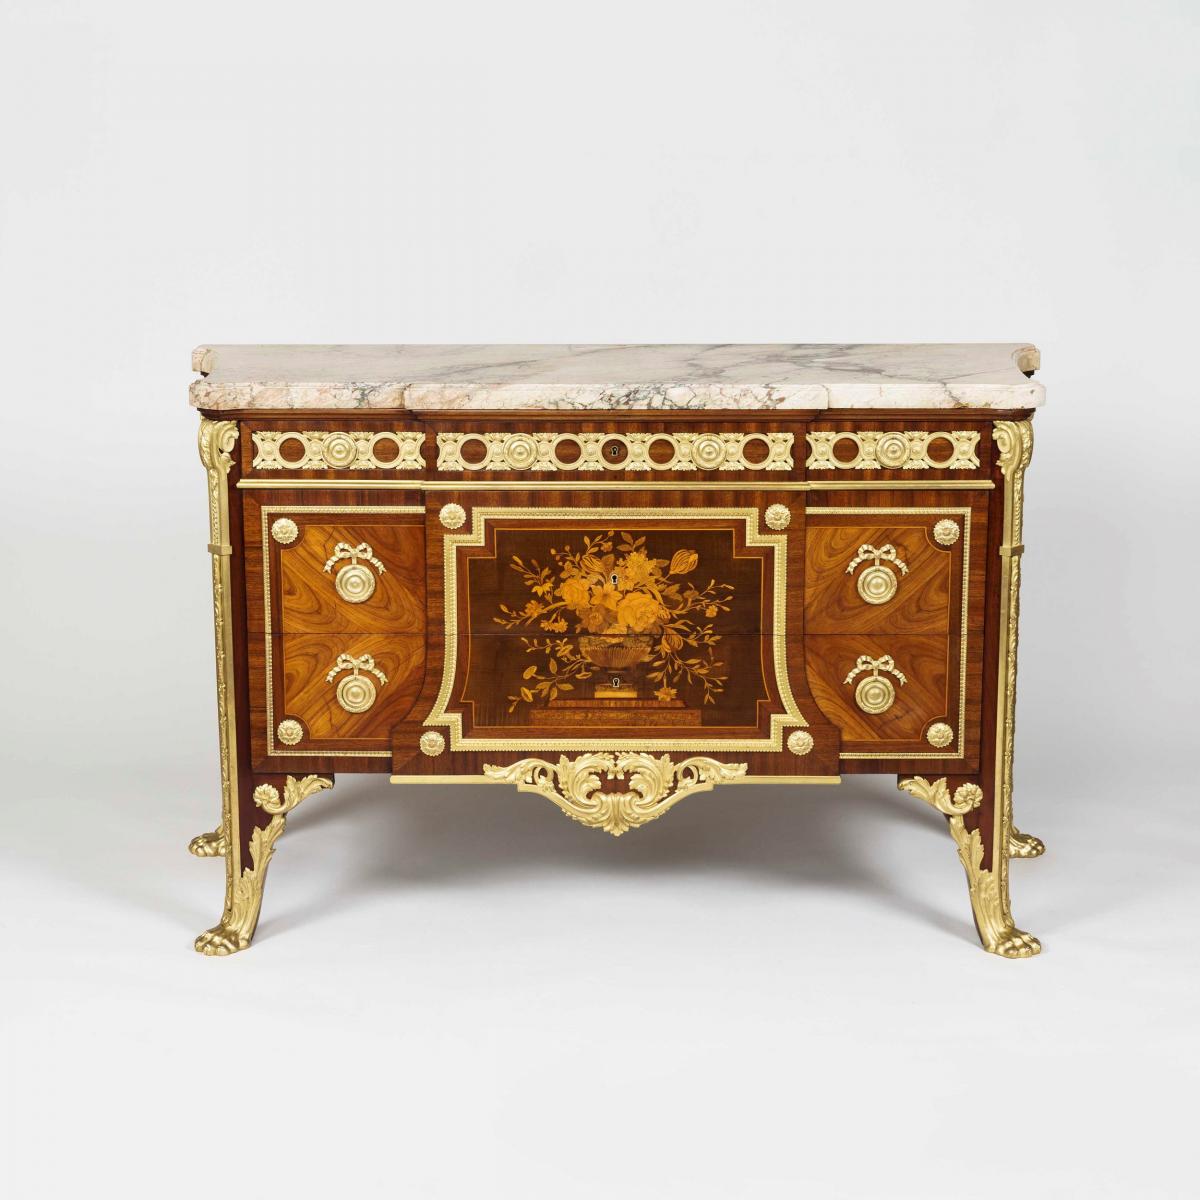 Very Fine Louis XVI Style Commode